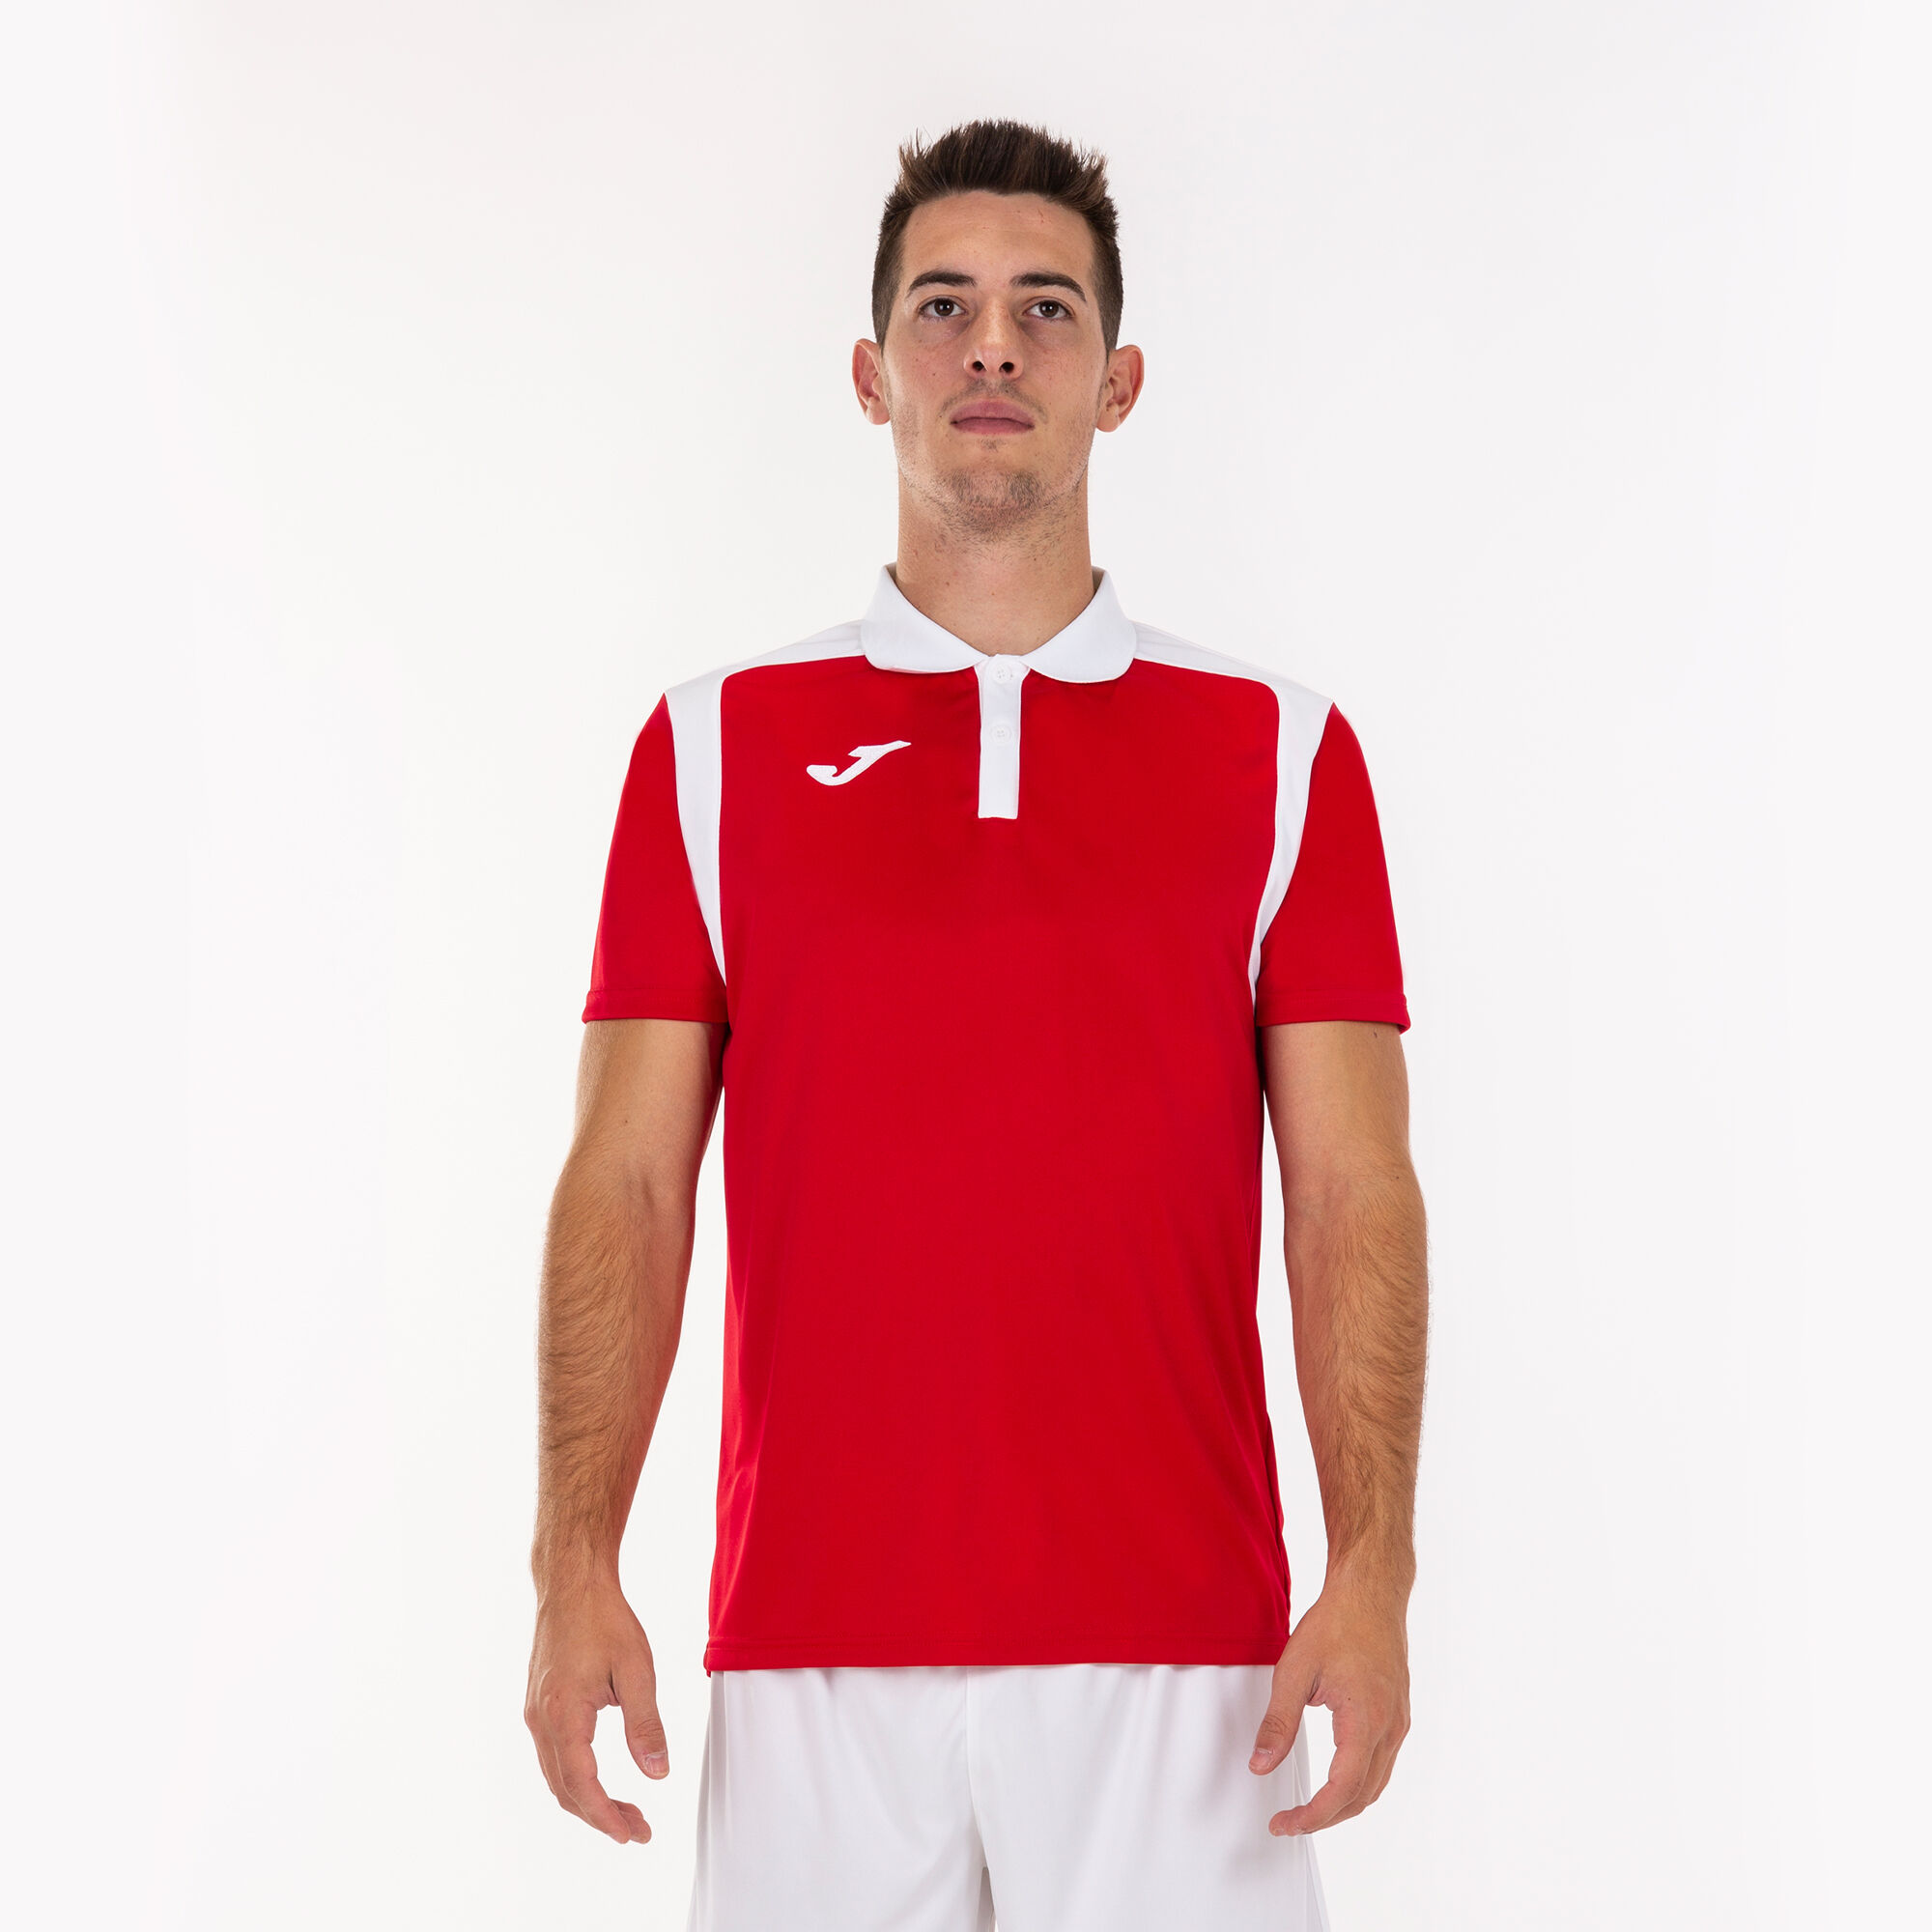 Polo shirt short-sleeve man Championship V red white